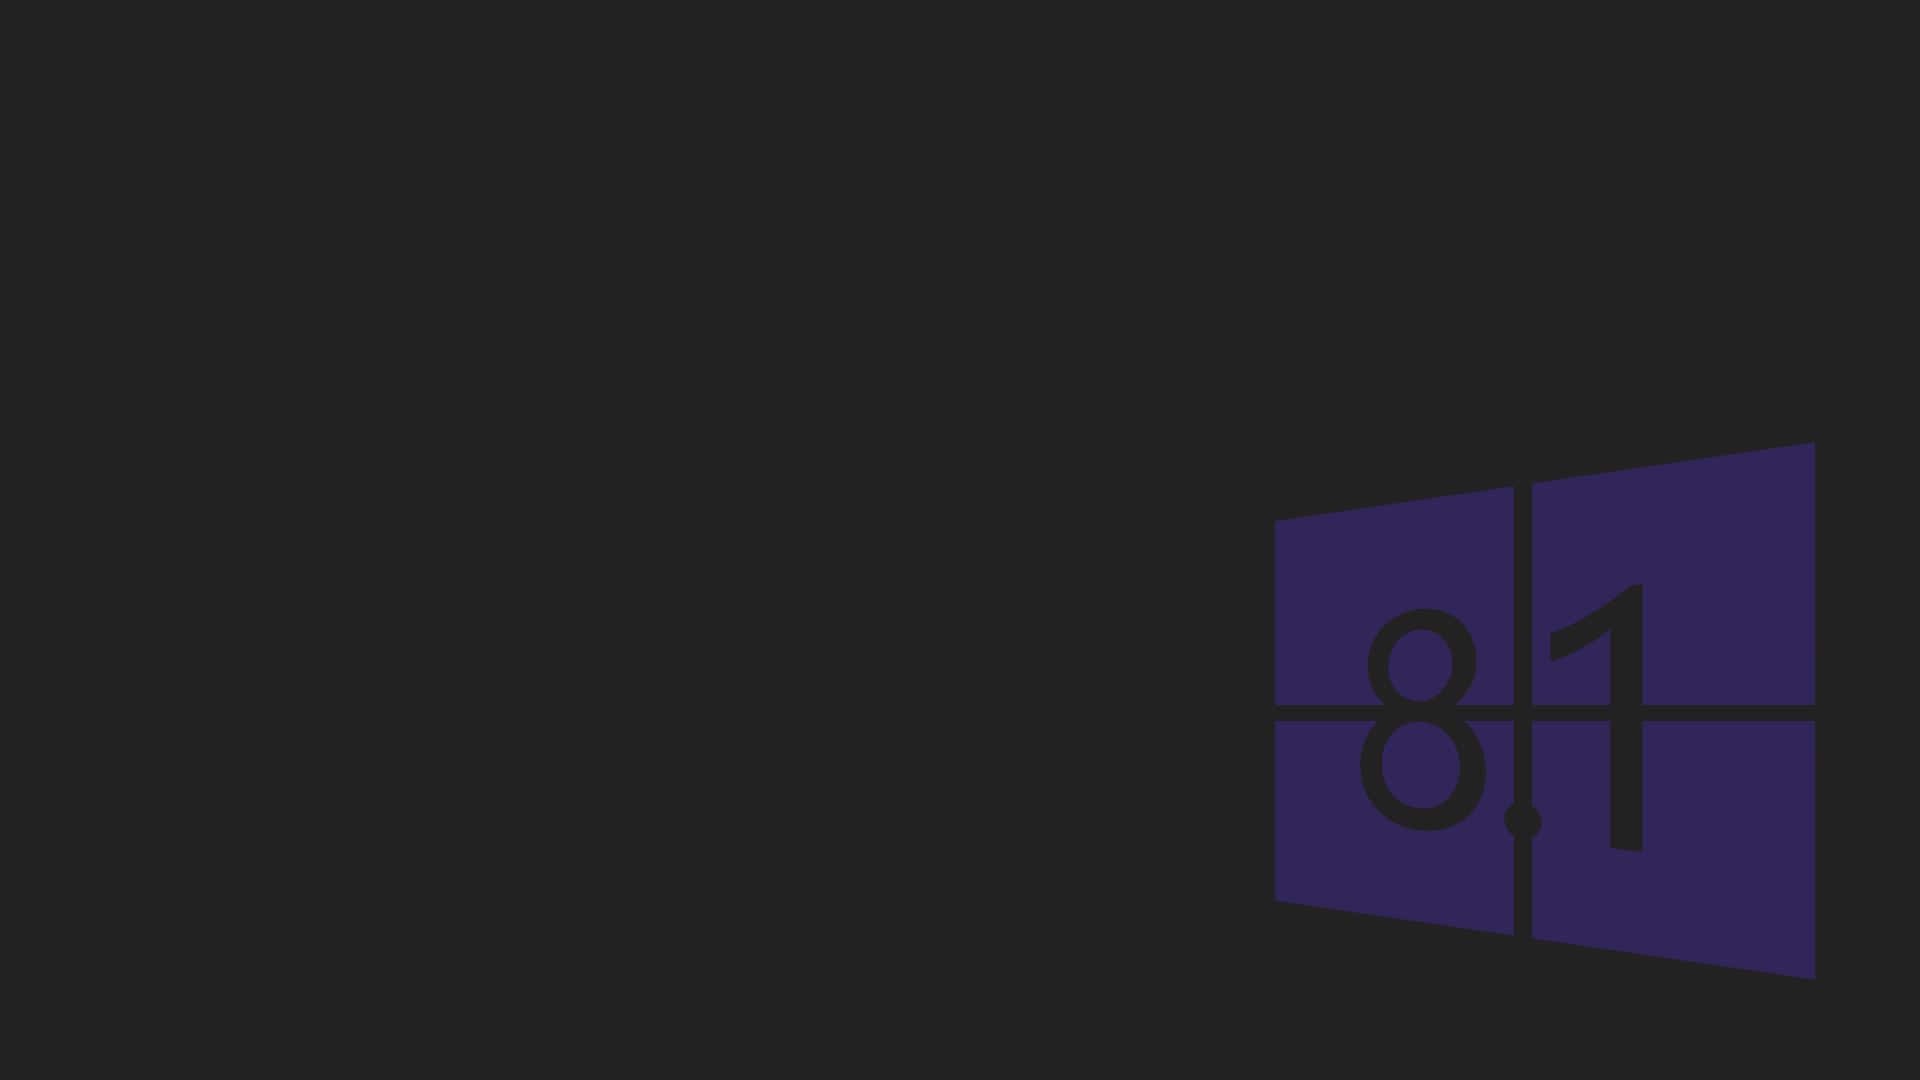 Windows 10 Logo On A Black Background